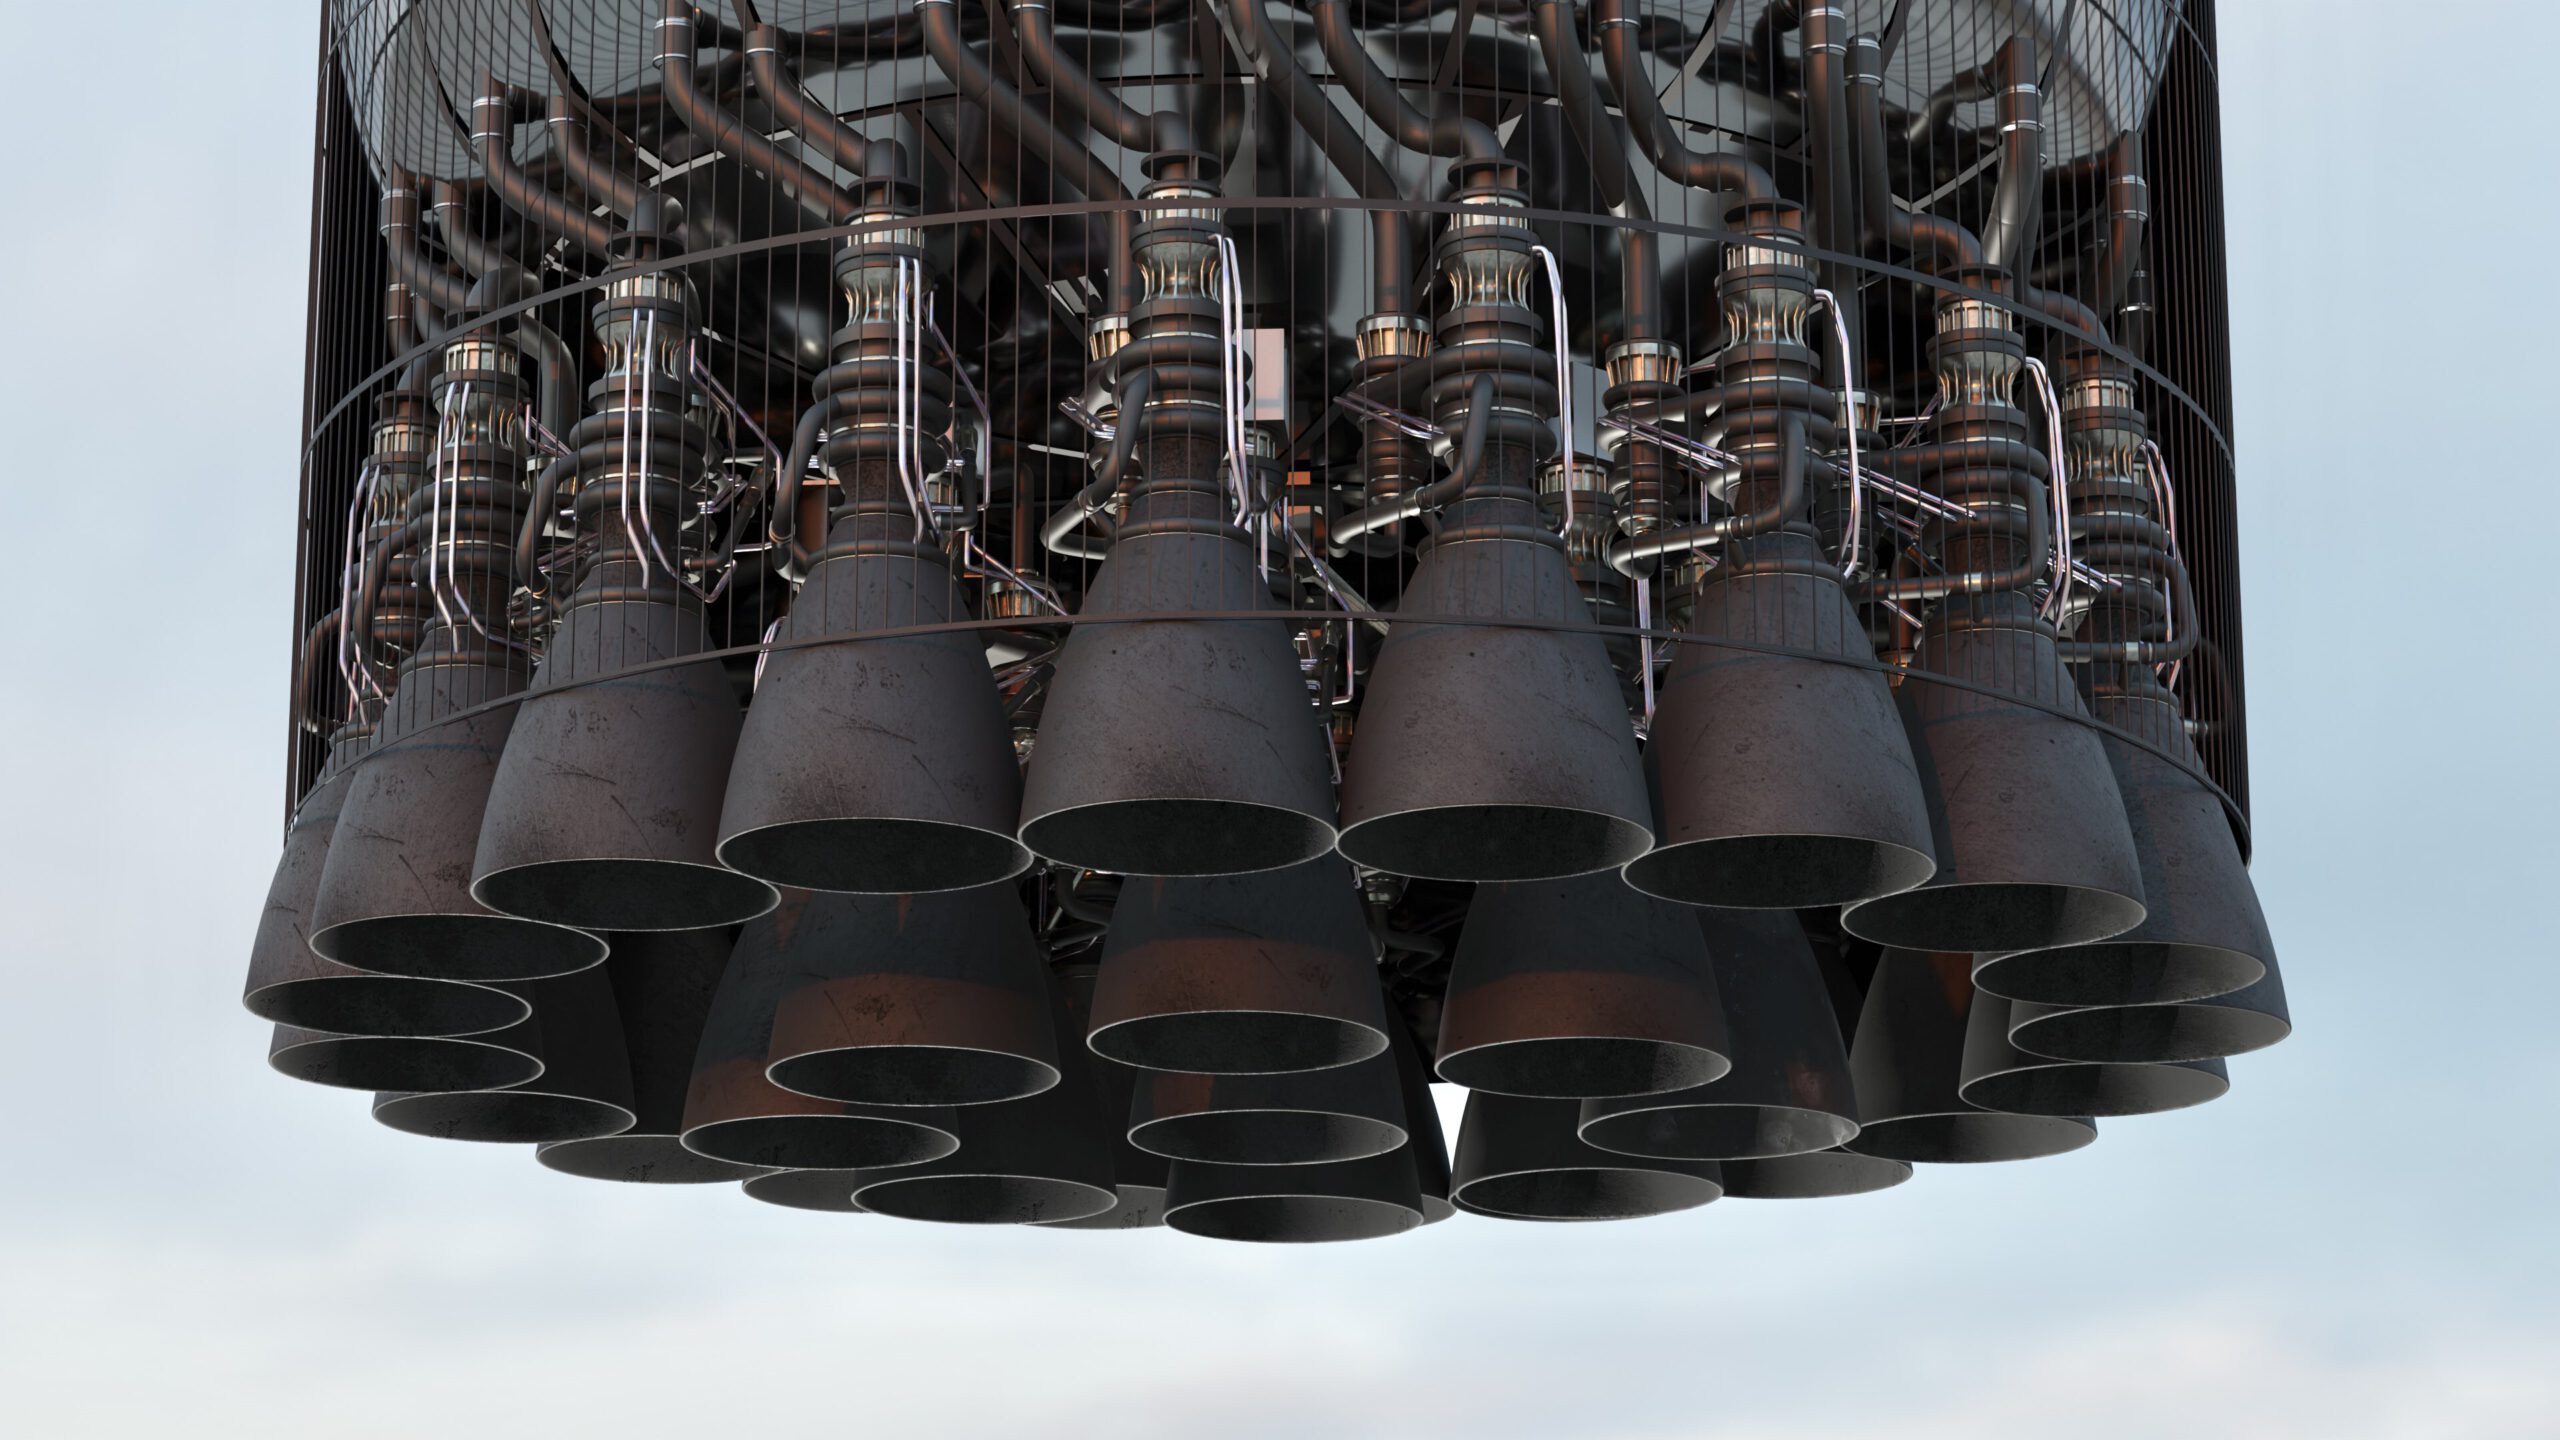 SpaceX super heavy raptor engines